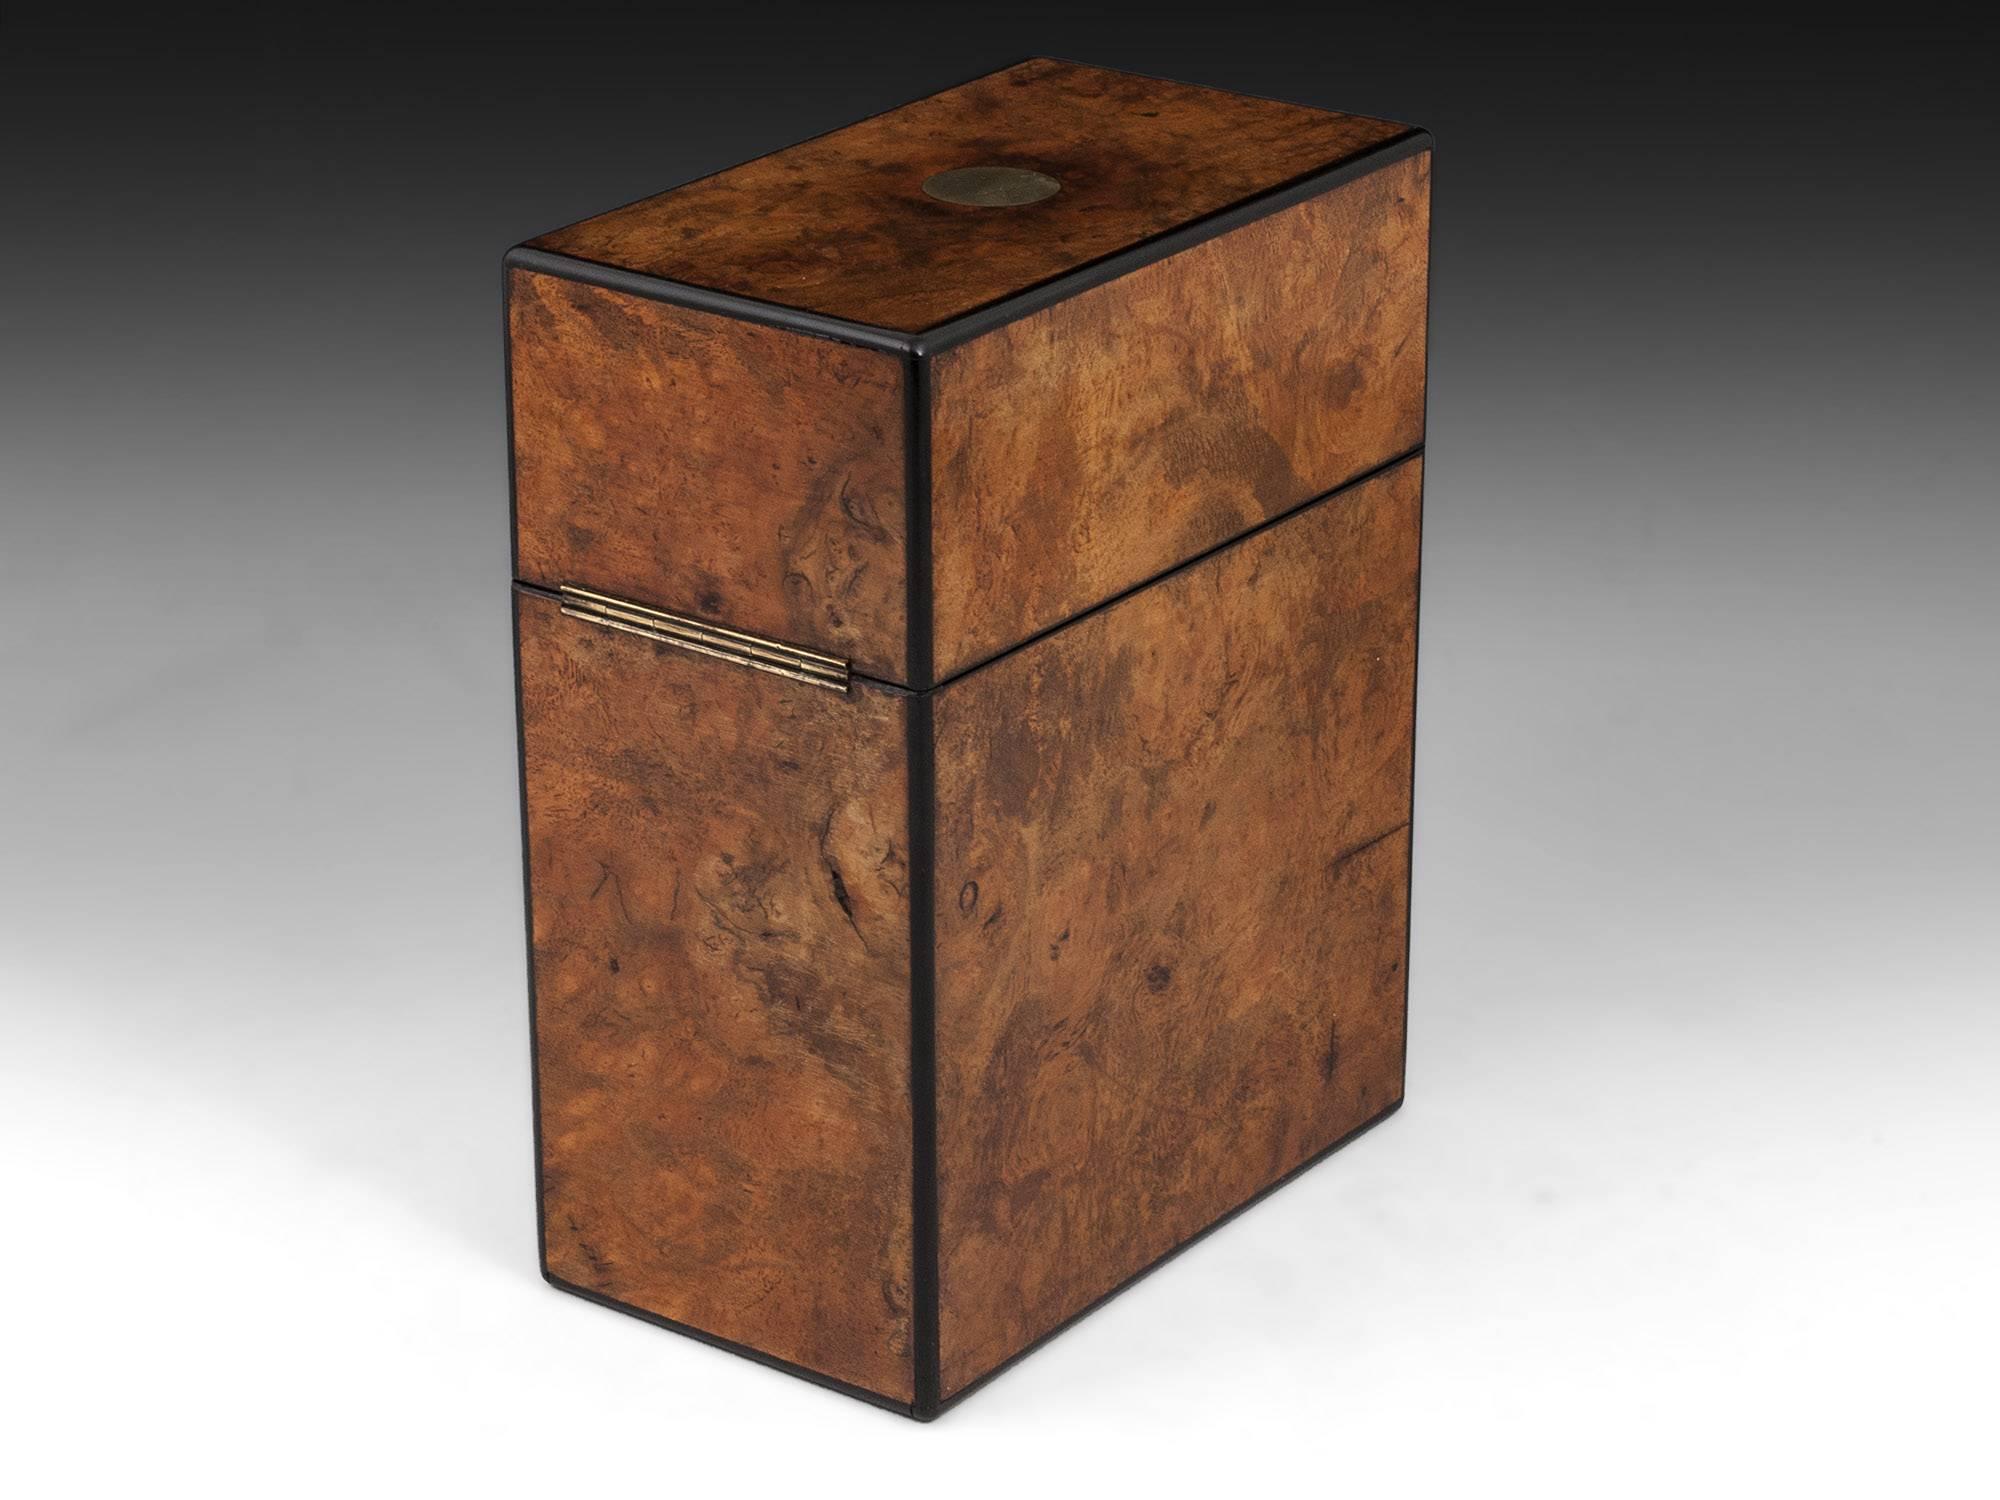 British Antique Burr Walnut Ebony Edged Single Decanter Box, 19th Century